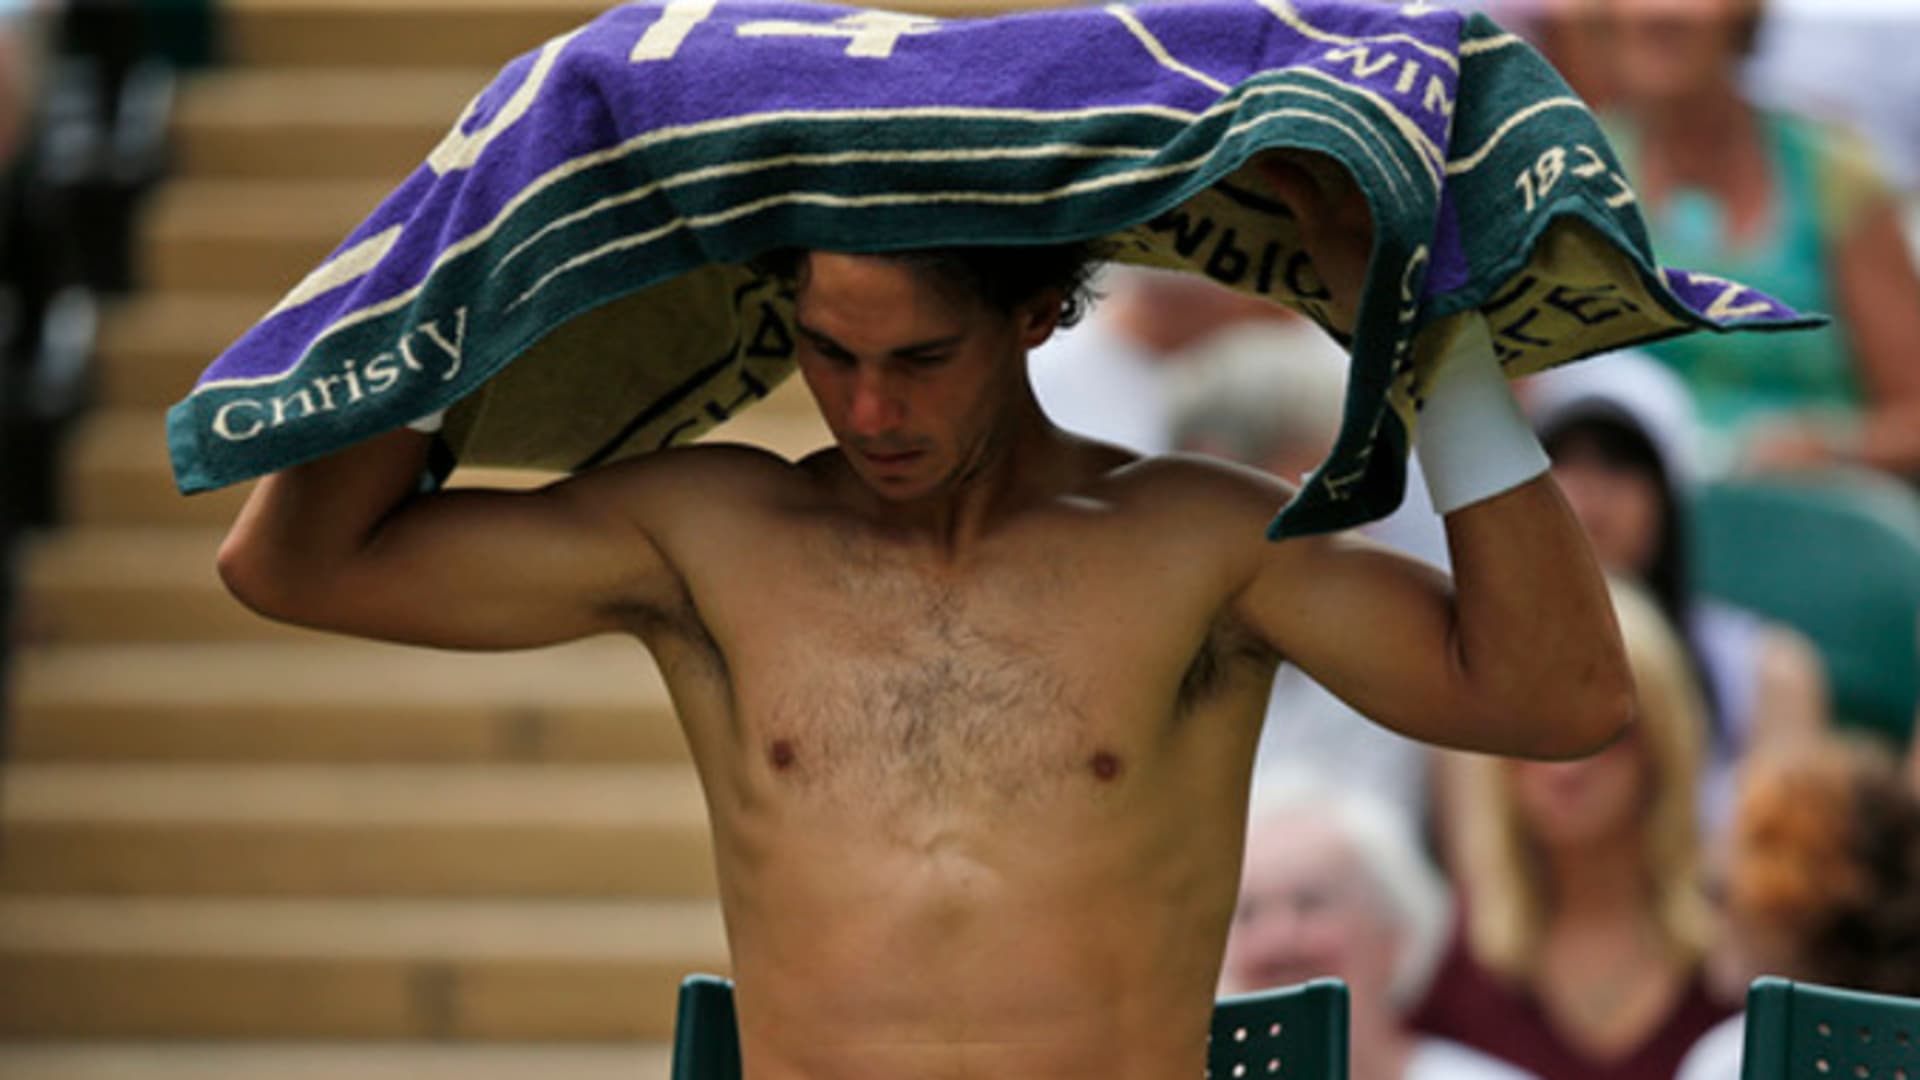 Rafa Nadal Strips Down to His Underwear in New 'Tommy Hilfiger' Ads 2015 –  Rafael Nadal Fans